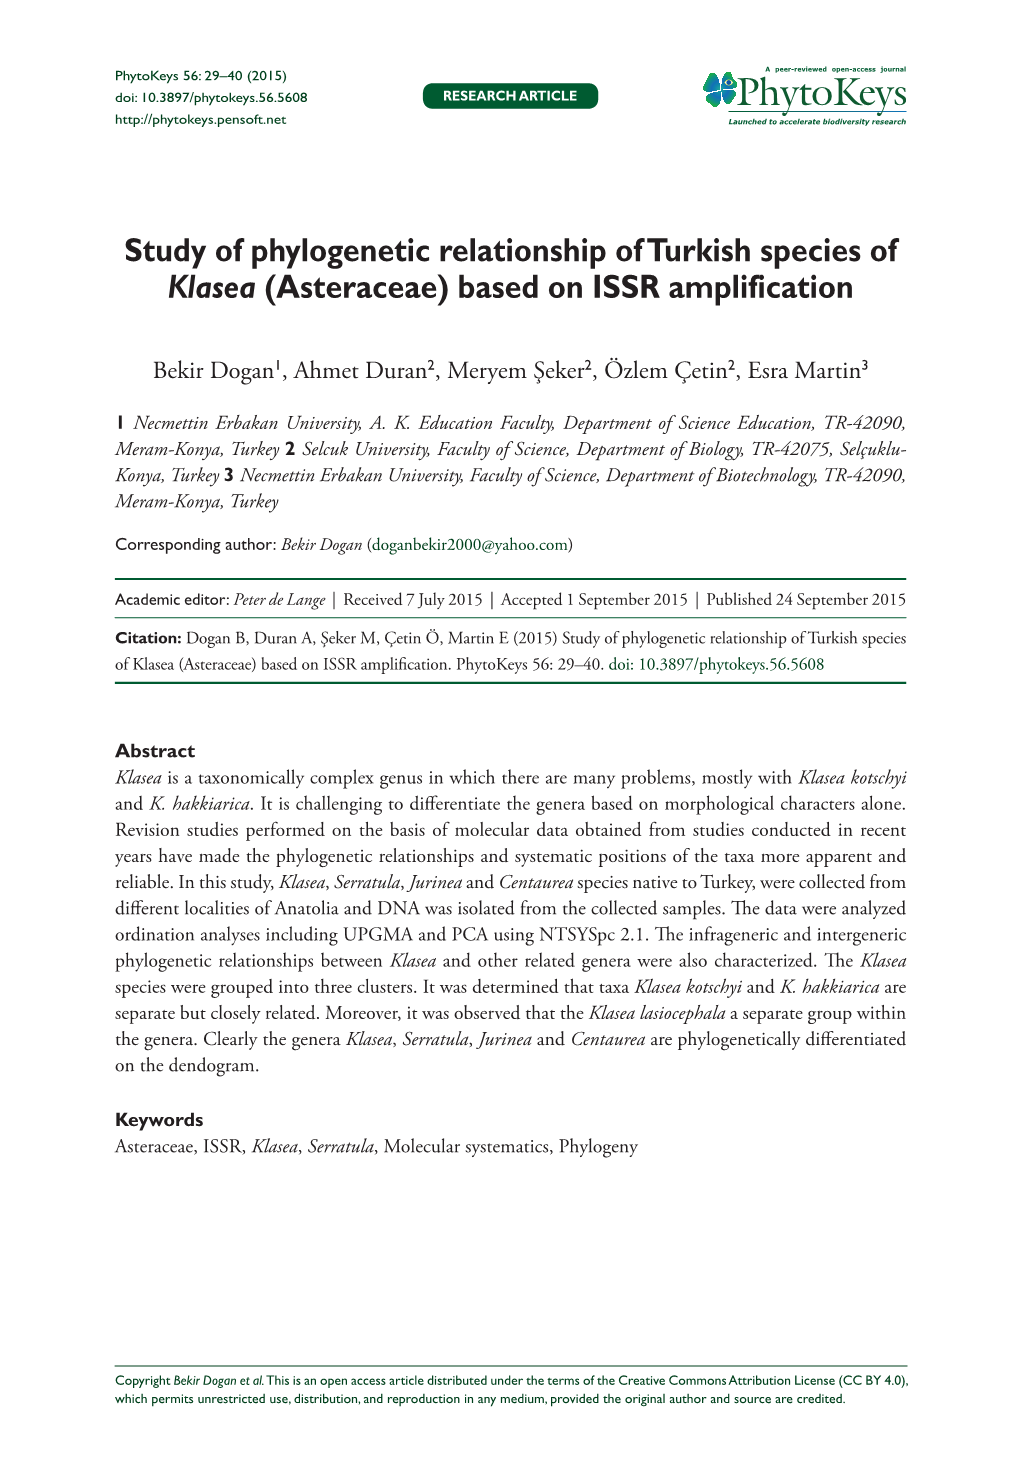 ﻿Study of Phylogenetic Relationship of Turkish Species of Klasea (Asteraceae) Based on ISSR Amplification